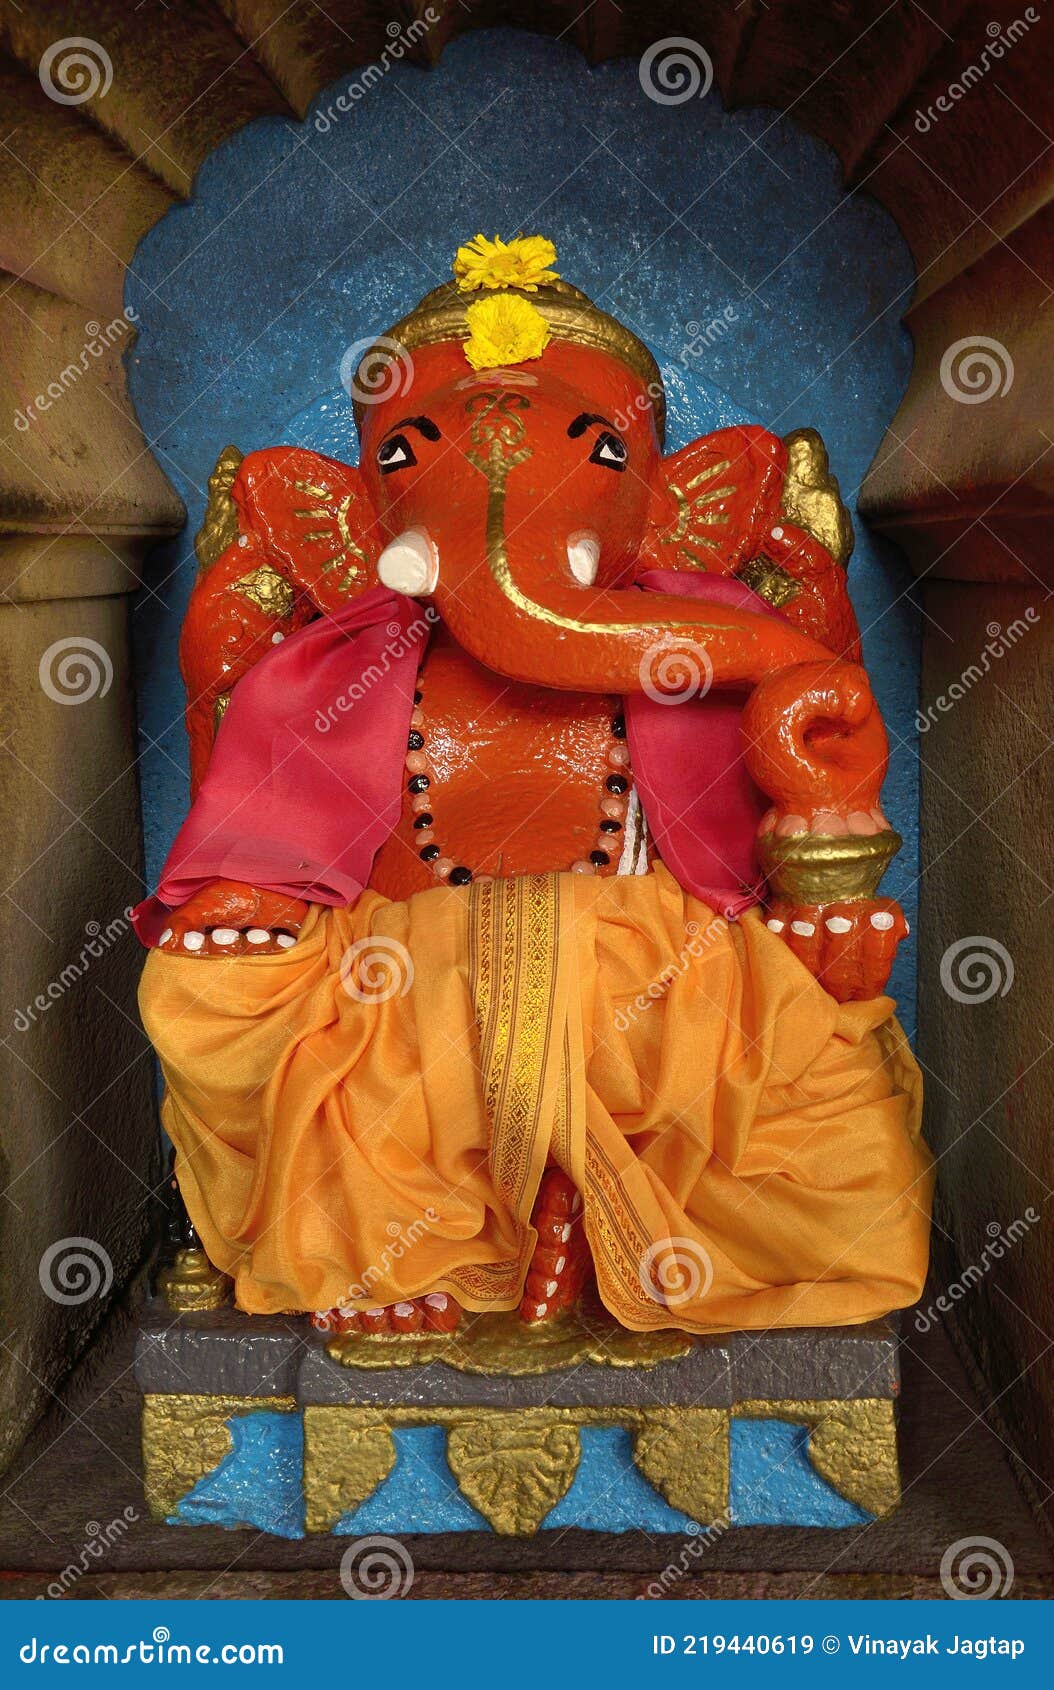 beautiful idol of hindu god lord ganesha in temple of wai, maharashtra, india